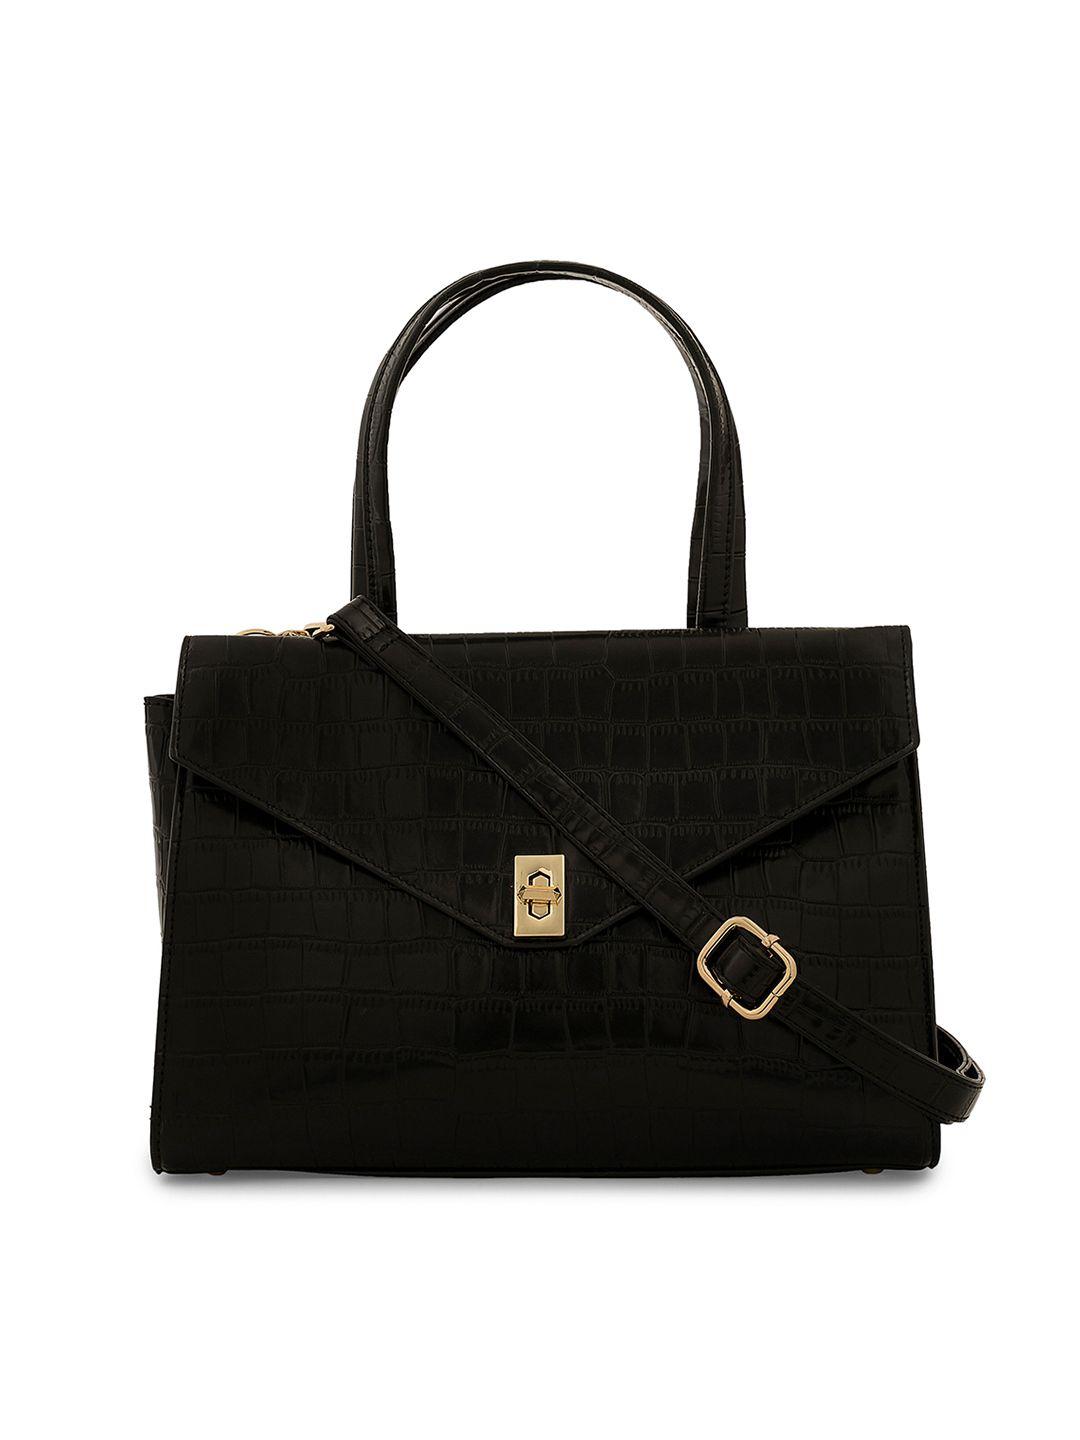 miraggio black textured structured satchel handbags